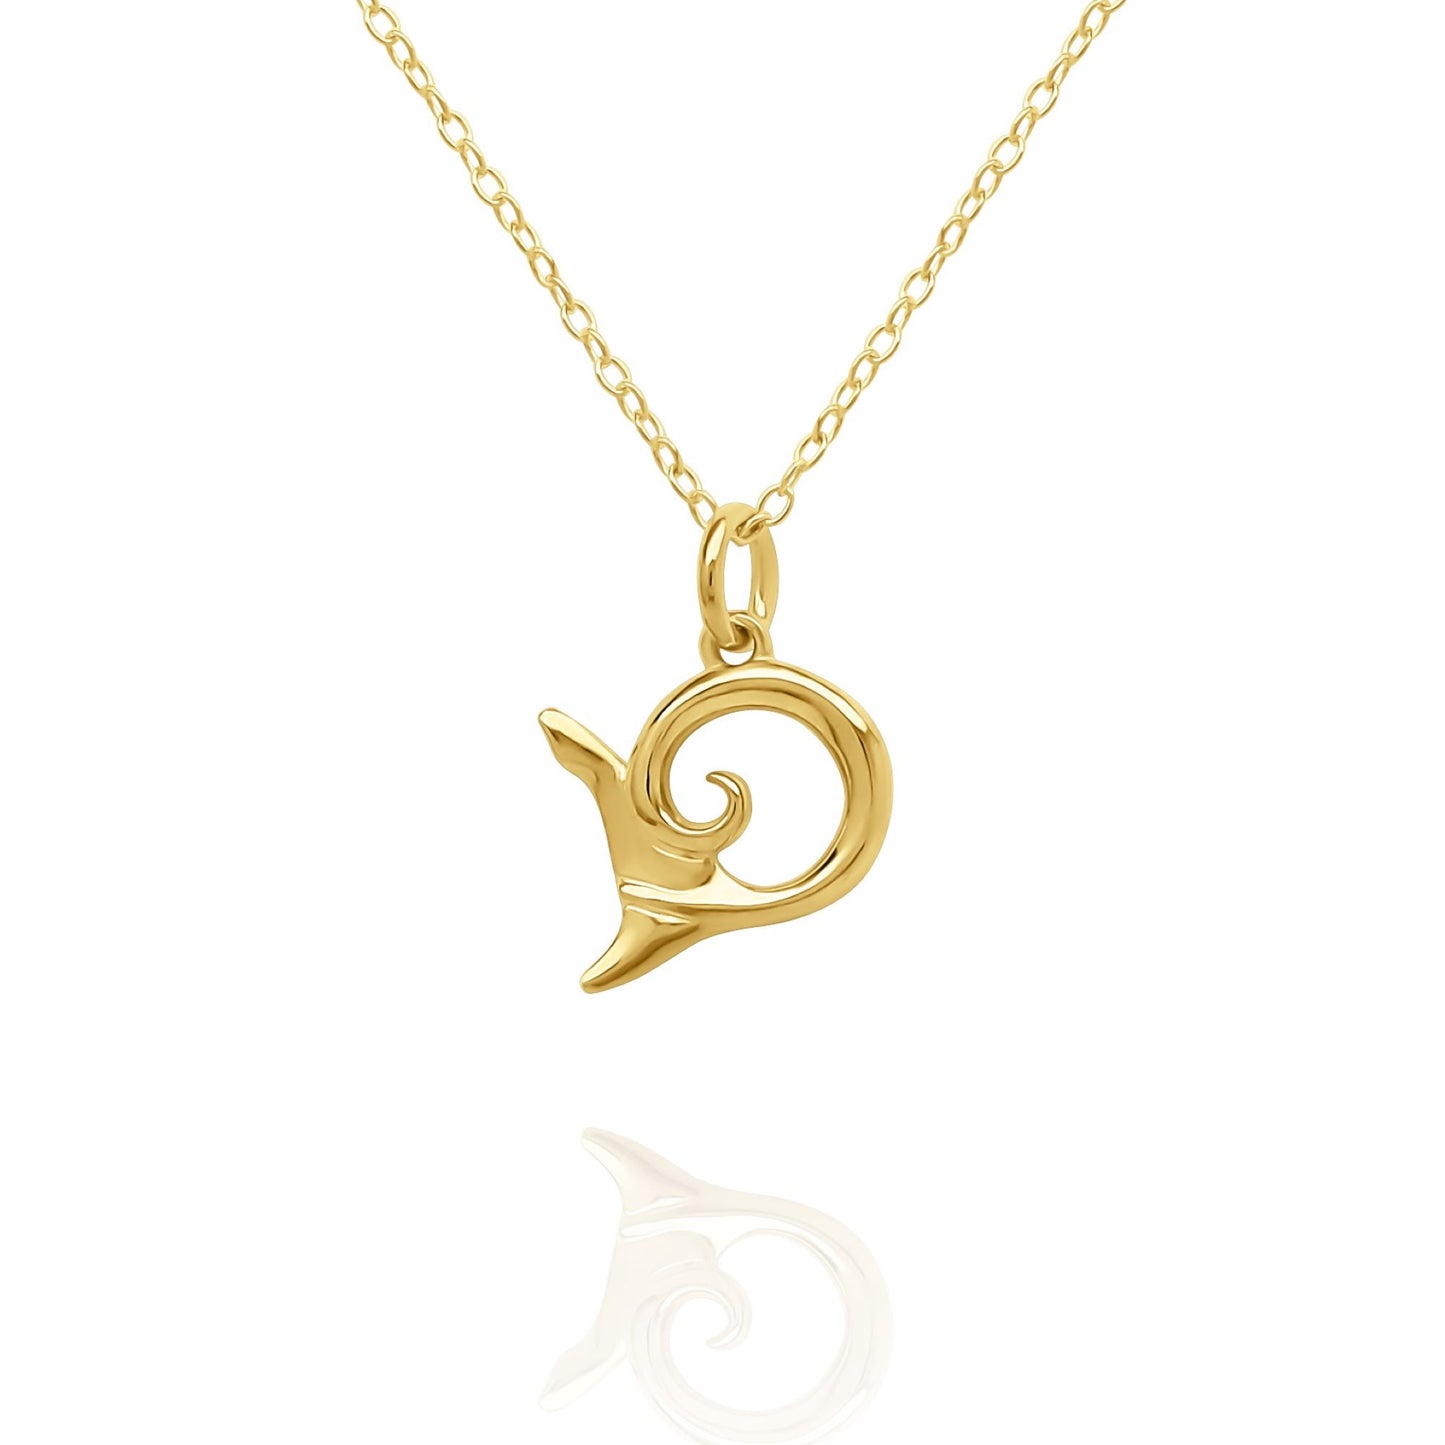 Gold vermeil Shark Tail charm pendant and chain. © Adrian Ashley